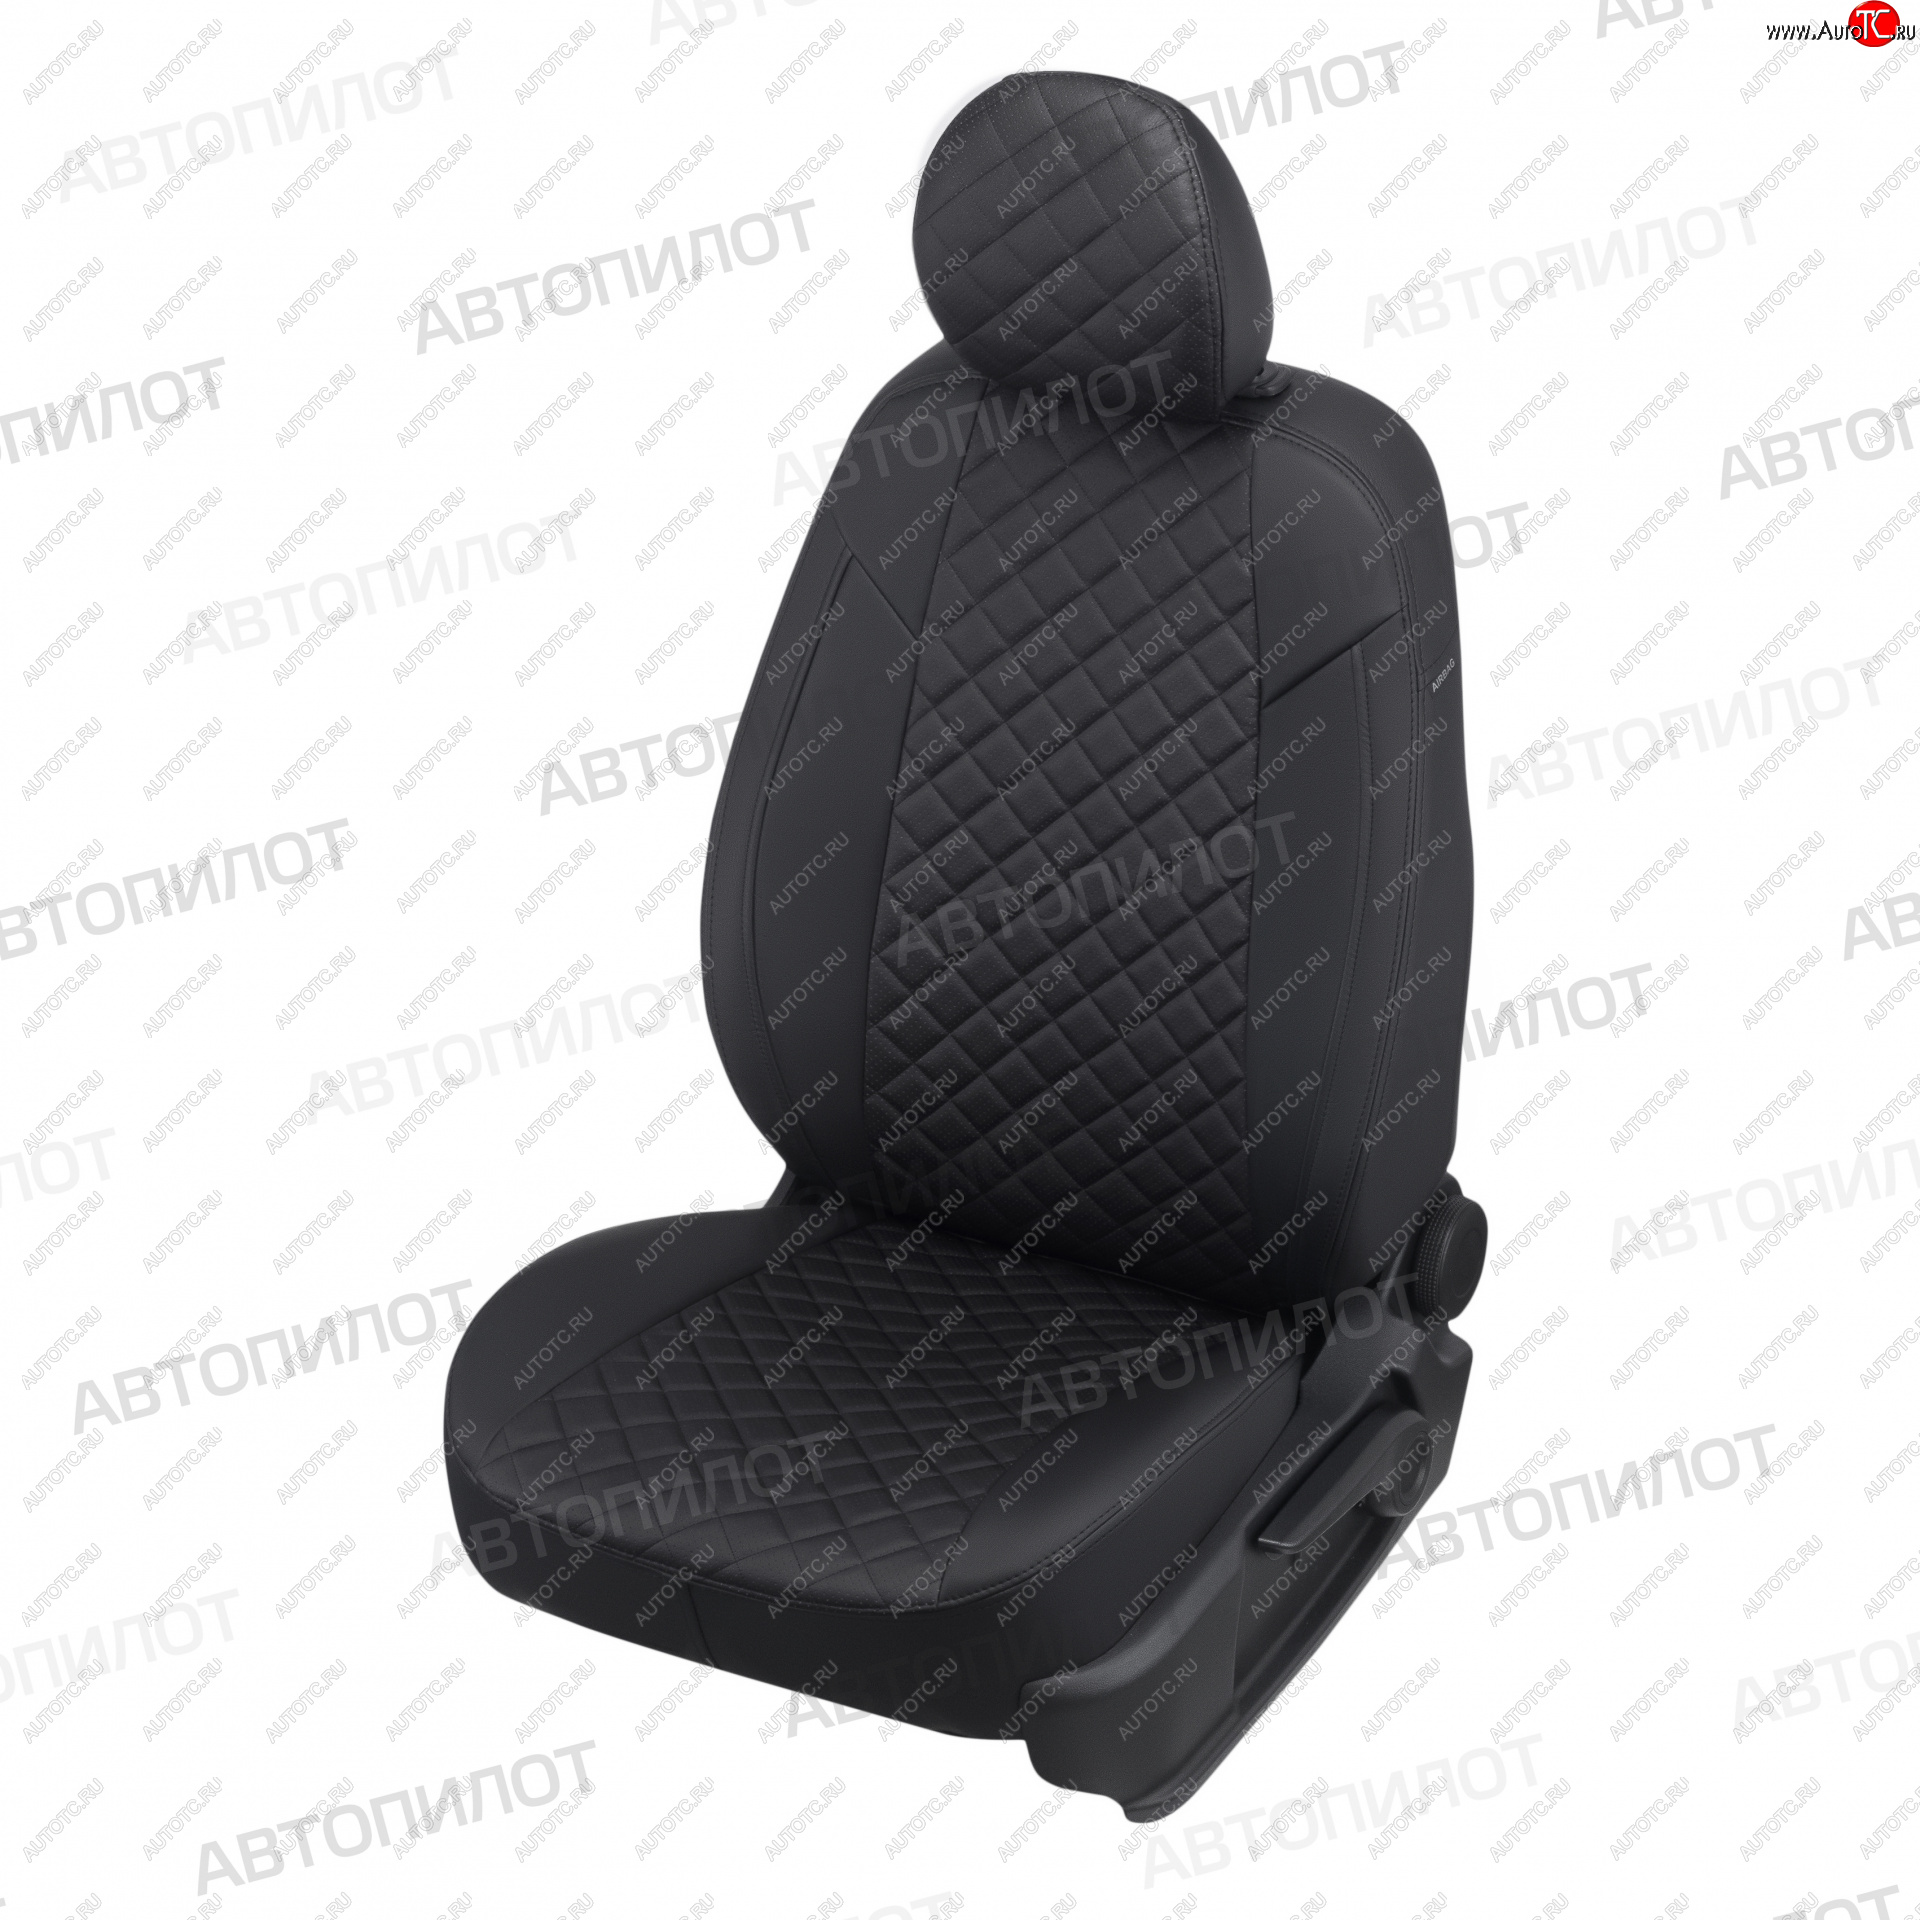 13 999 р. Чехлы сидений (экокожа, Grand 50/50) Автопилот Ромб  KIA Sportage  1 JA (1993-2006) (черный)